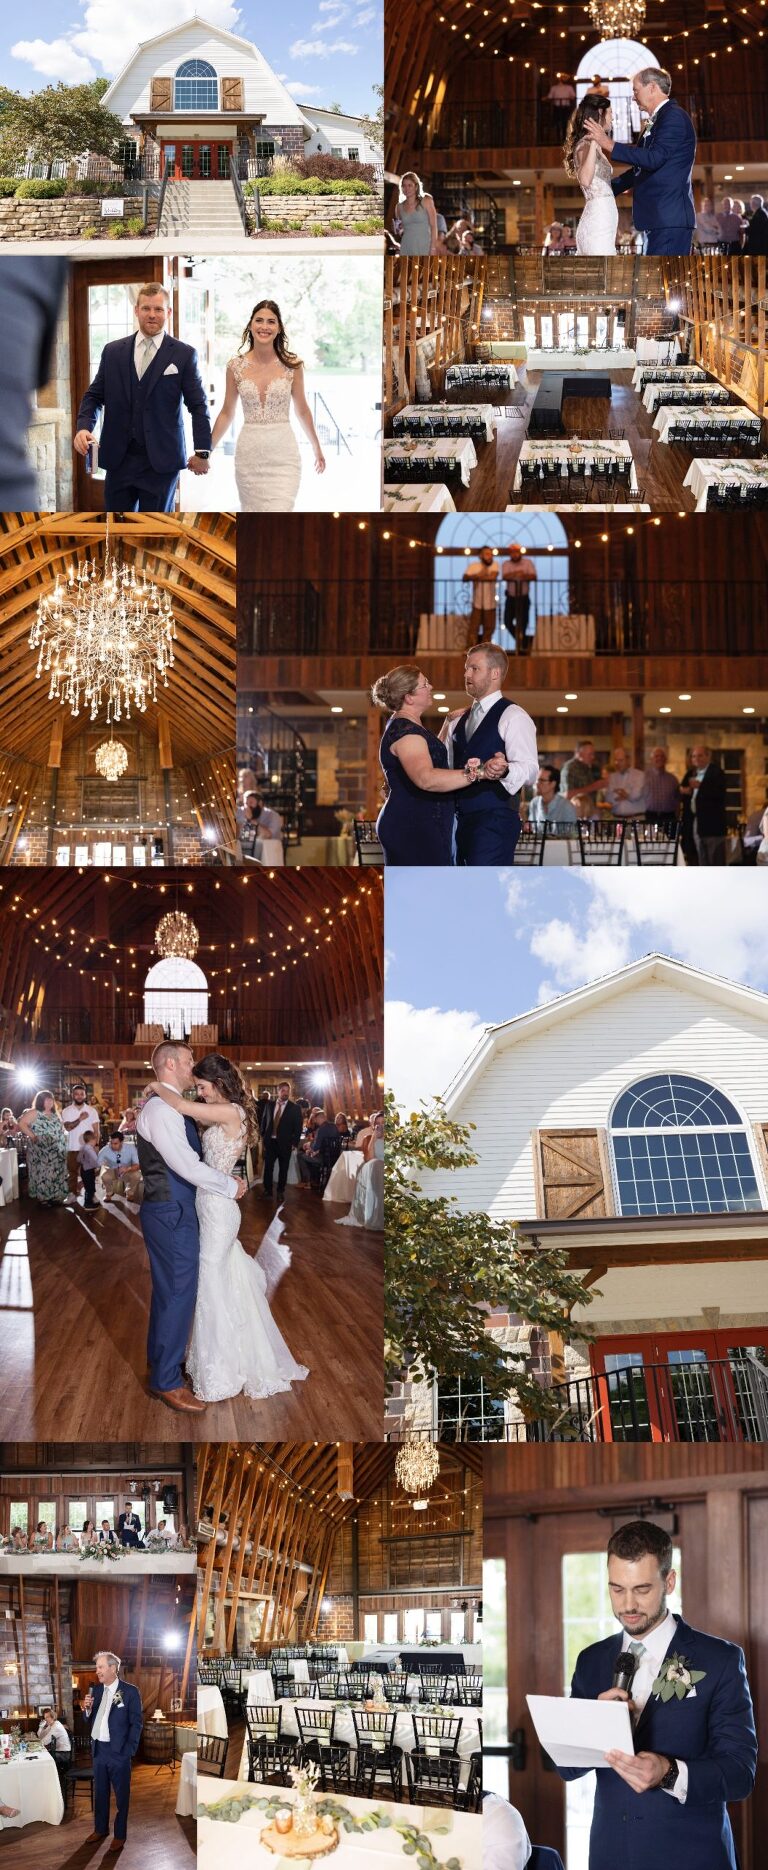 Susy_Photo_Kansas_City_Wedding_Photographer_The_Brownstone_Event_center_